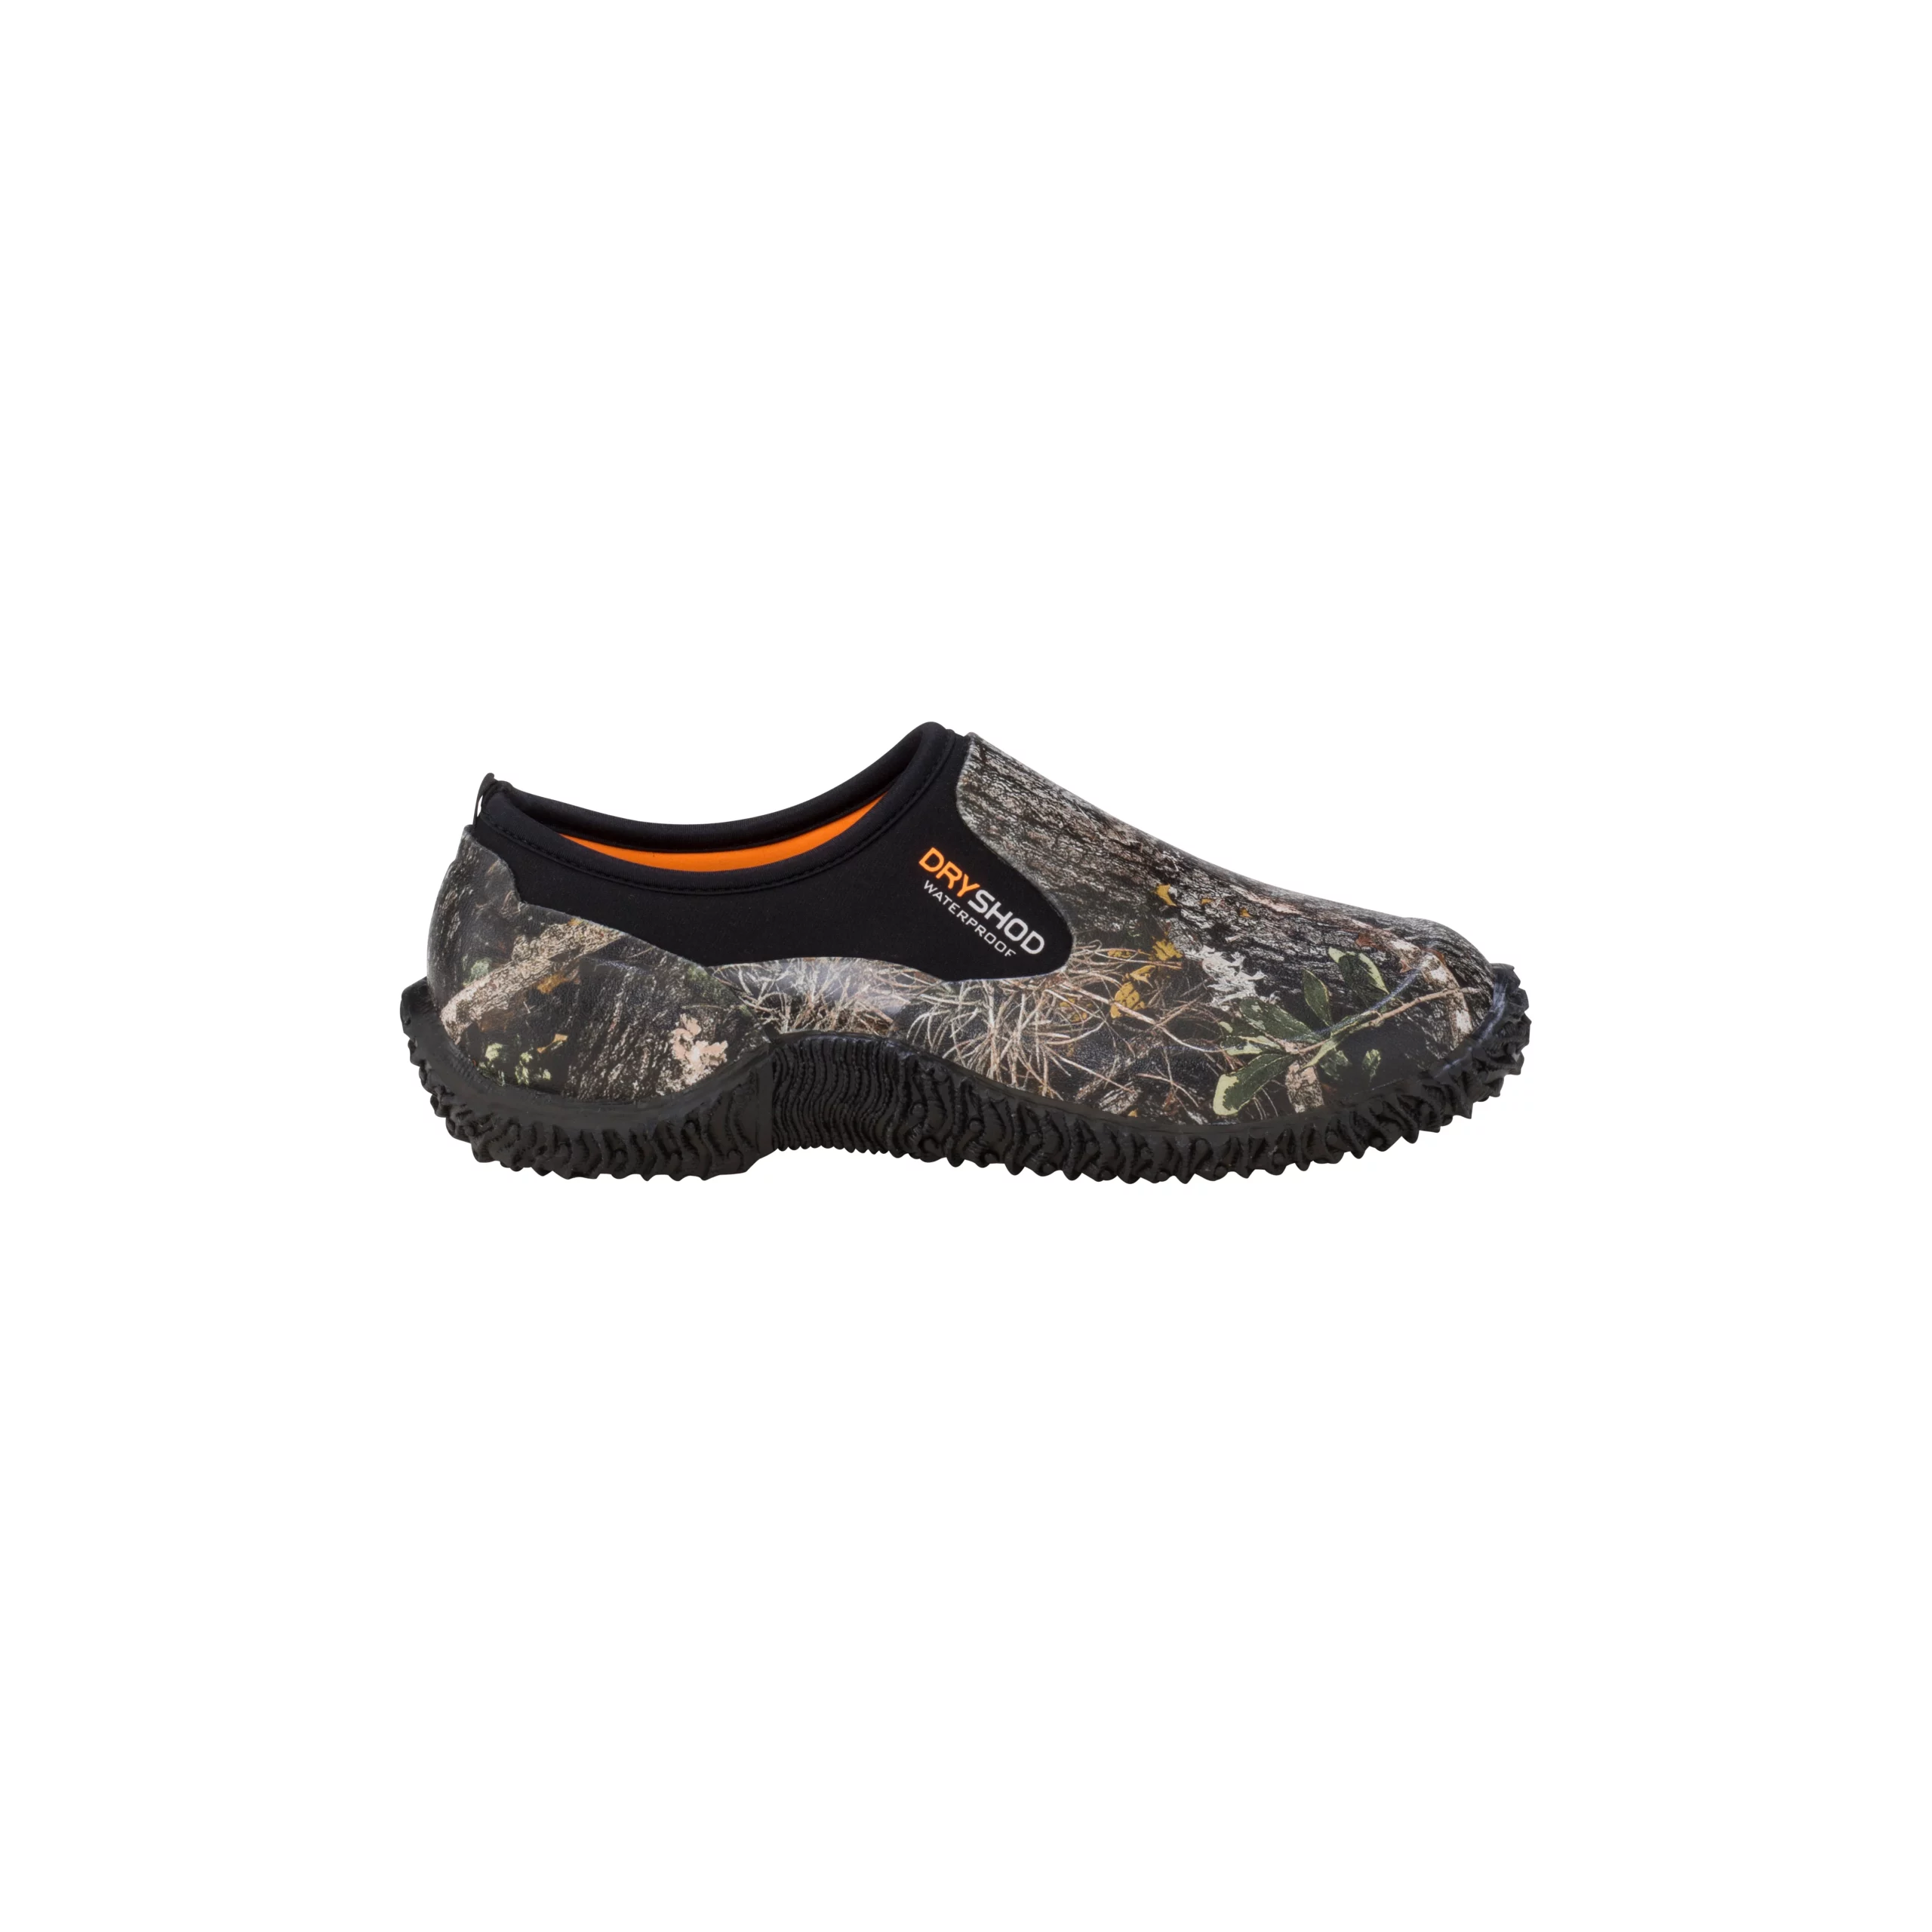 DryShod Legend Neoprene Rubber Camp Shoes Camo